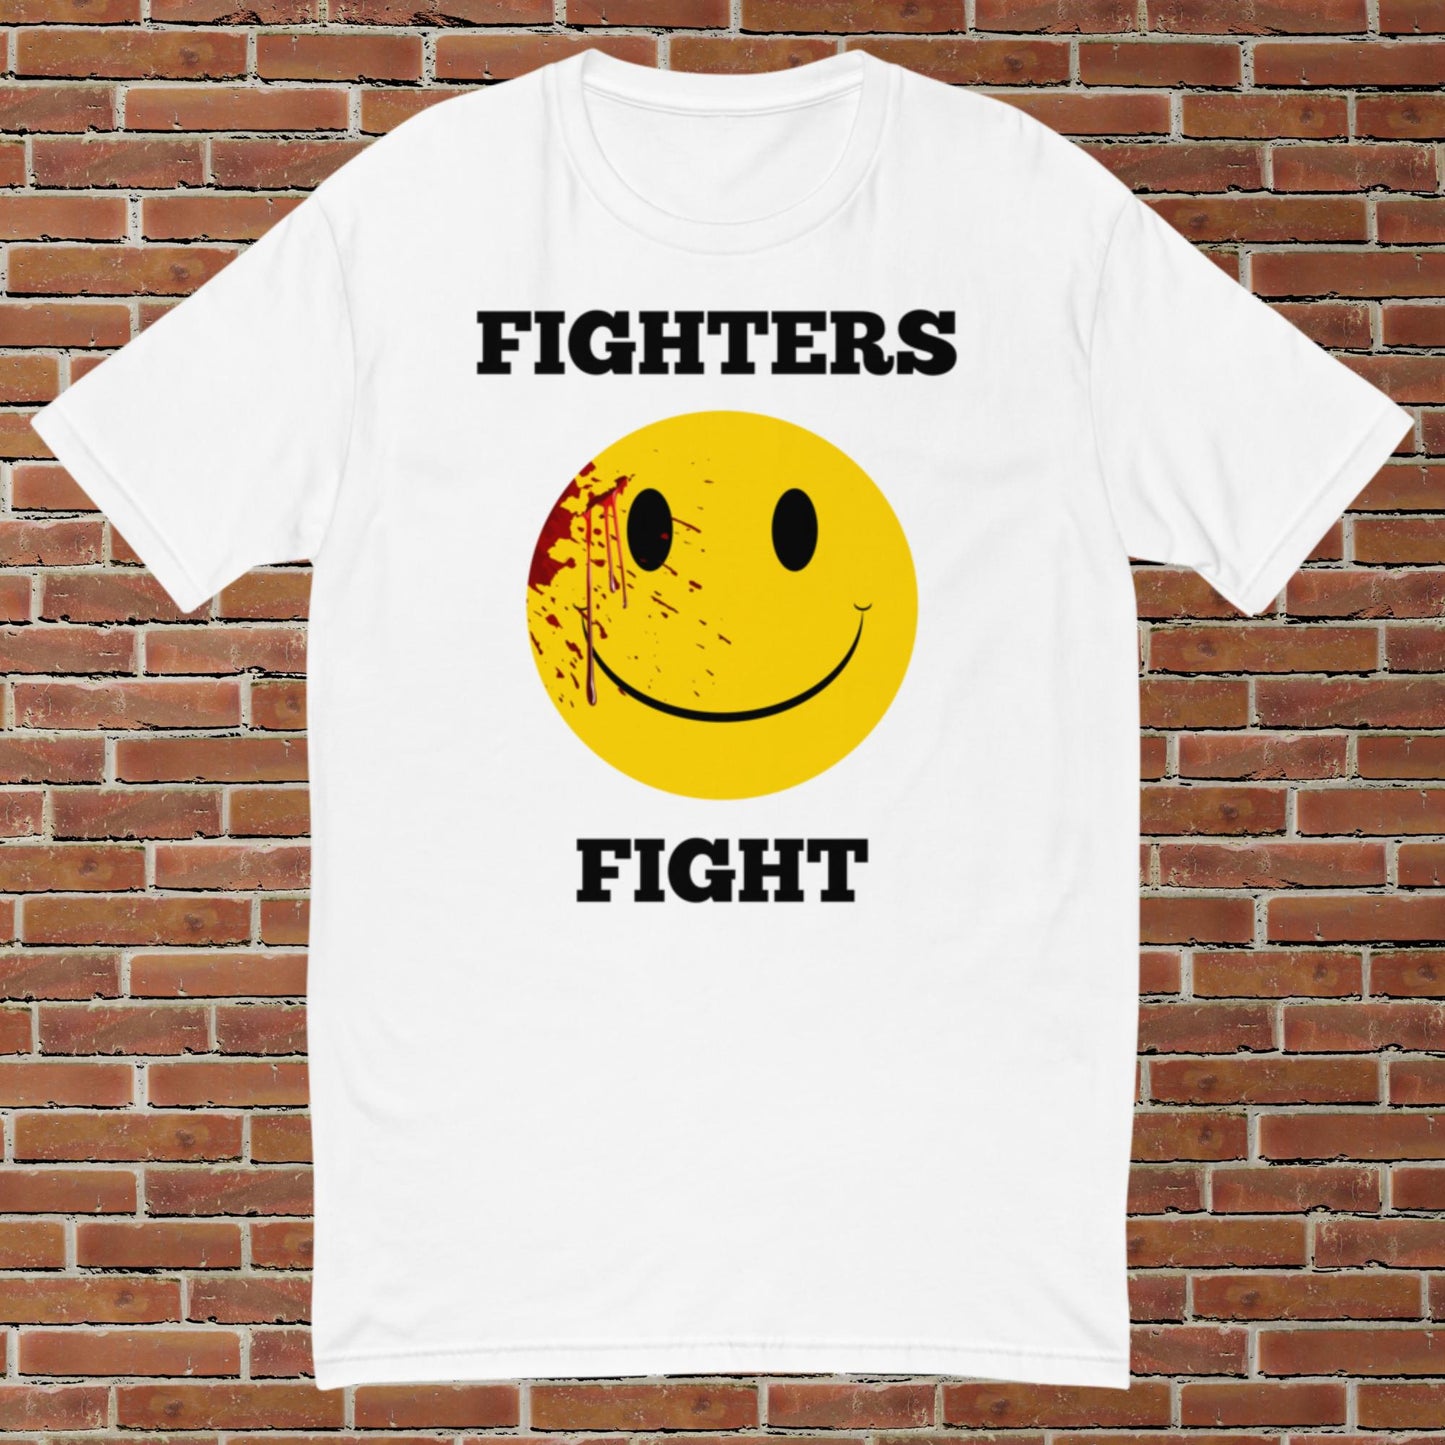 Men's Short Sleeve Fighter's Fight T-shirt